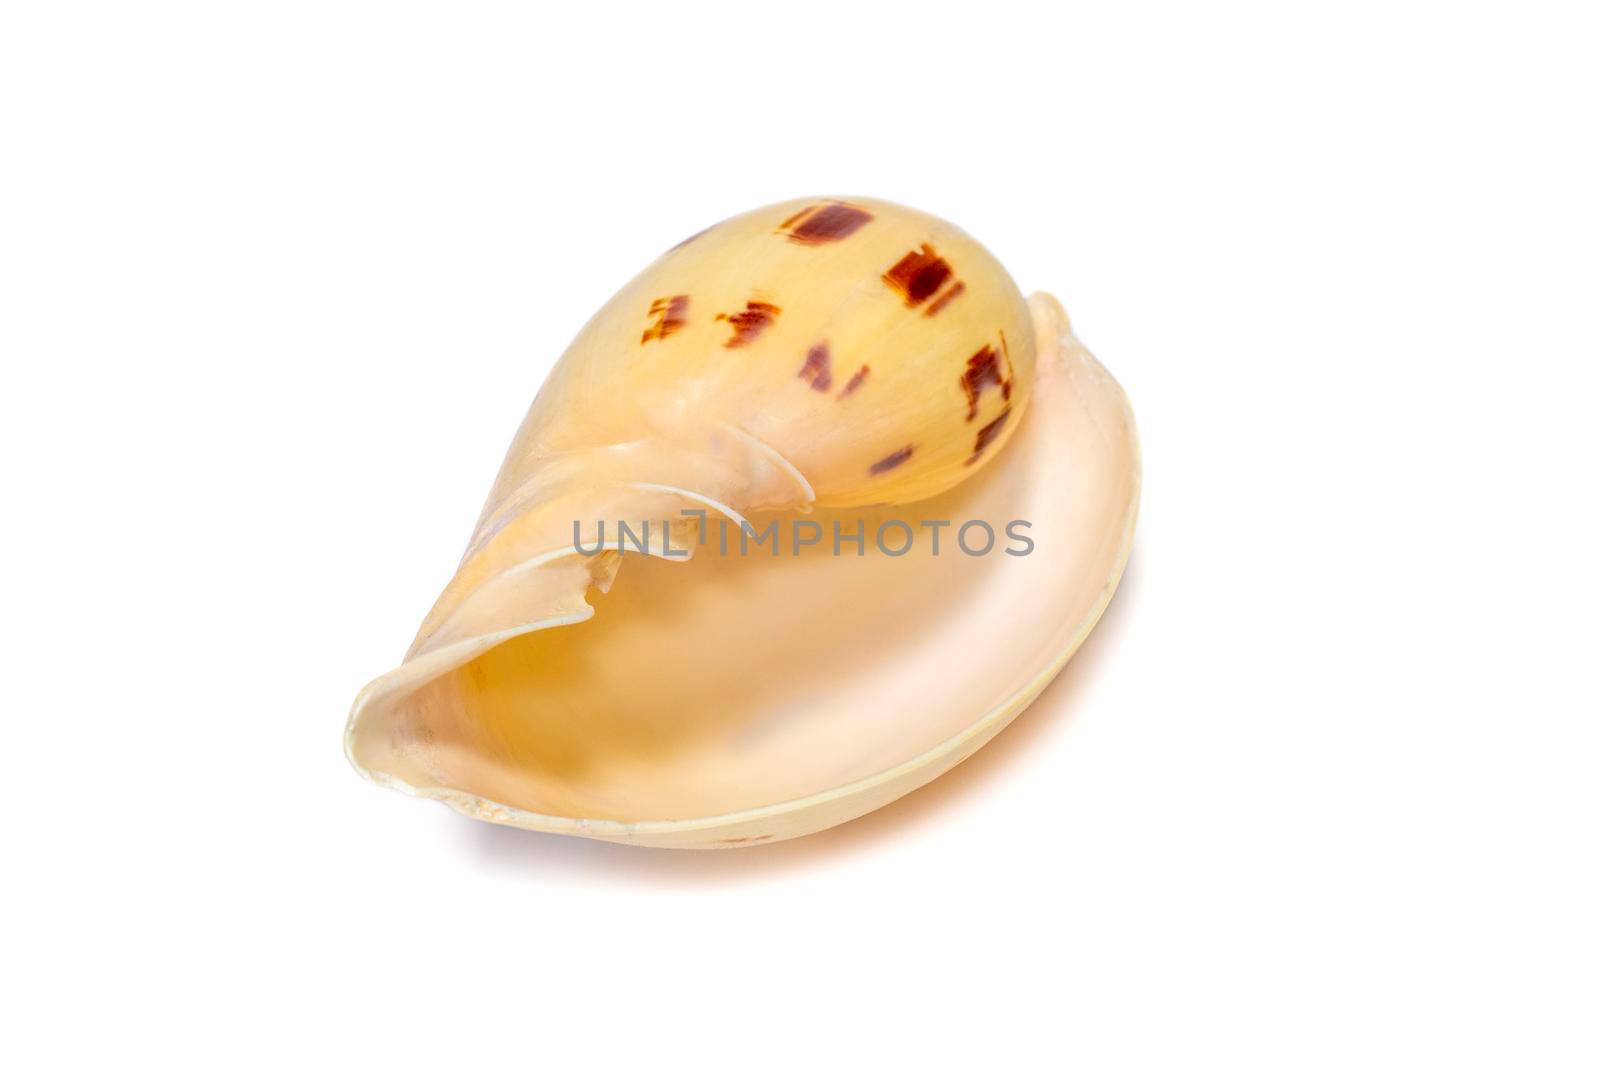 Image of seashells melo melo on a white background. Undersea Animals. Sea Shells.